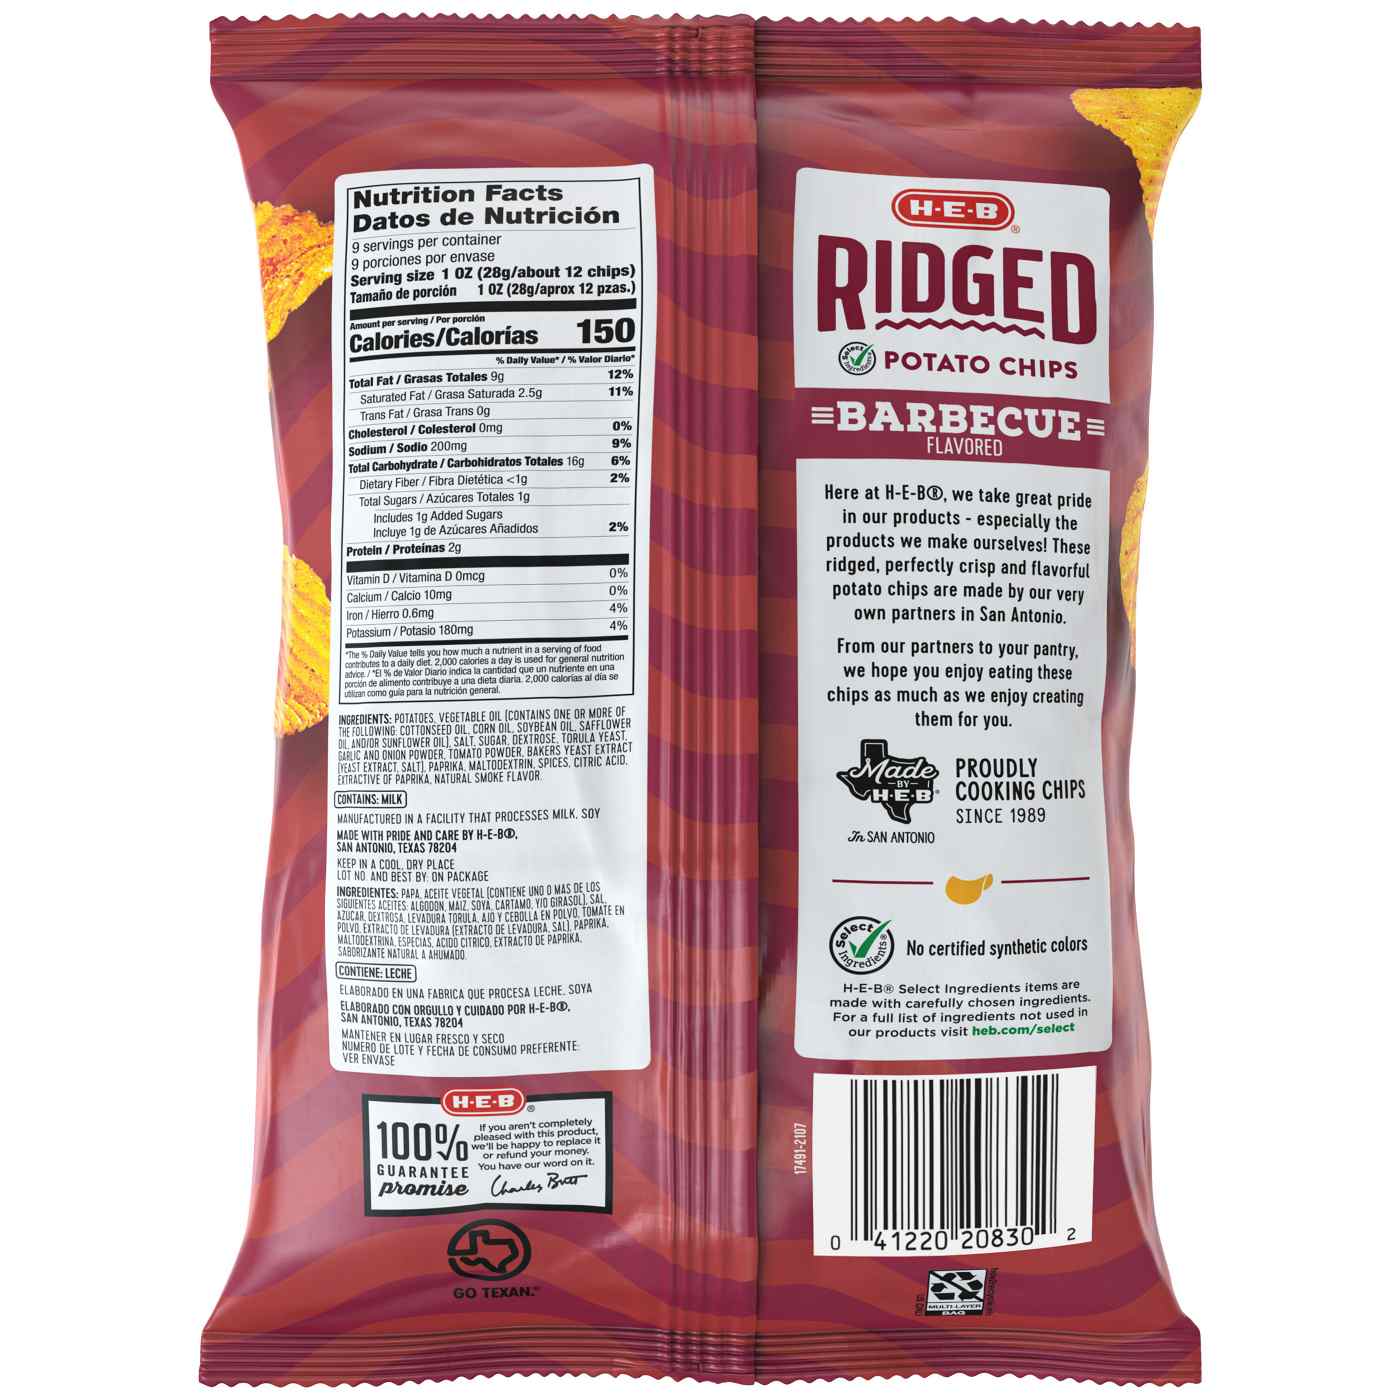 H-E-B Ridged Potato Chips - Barbecue; image 2 of 2